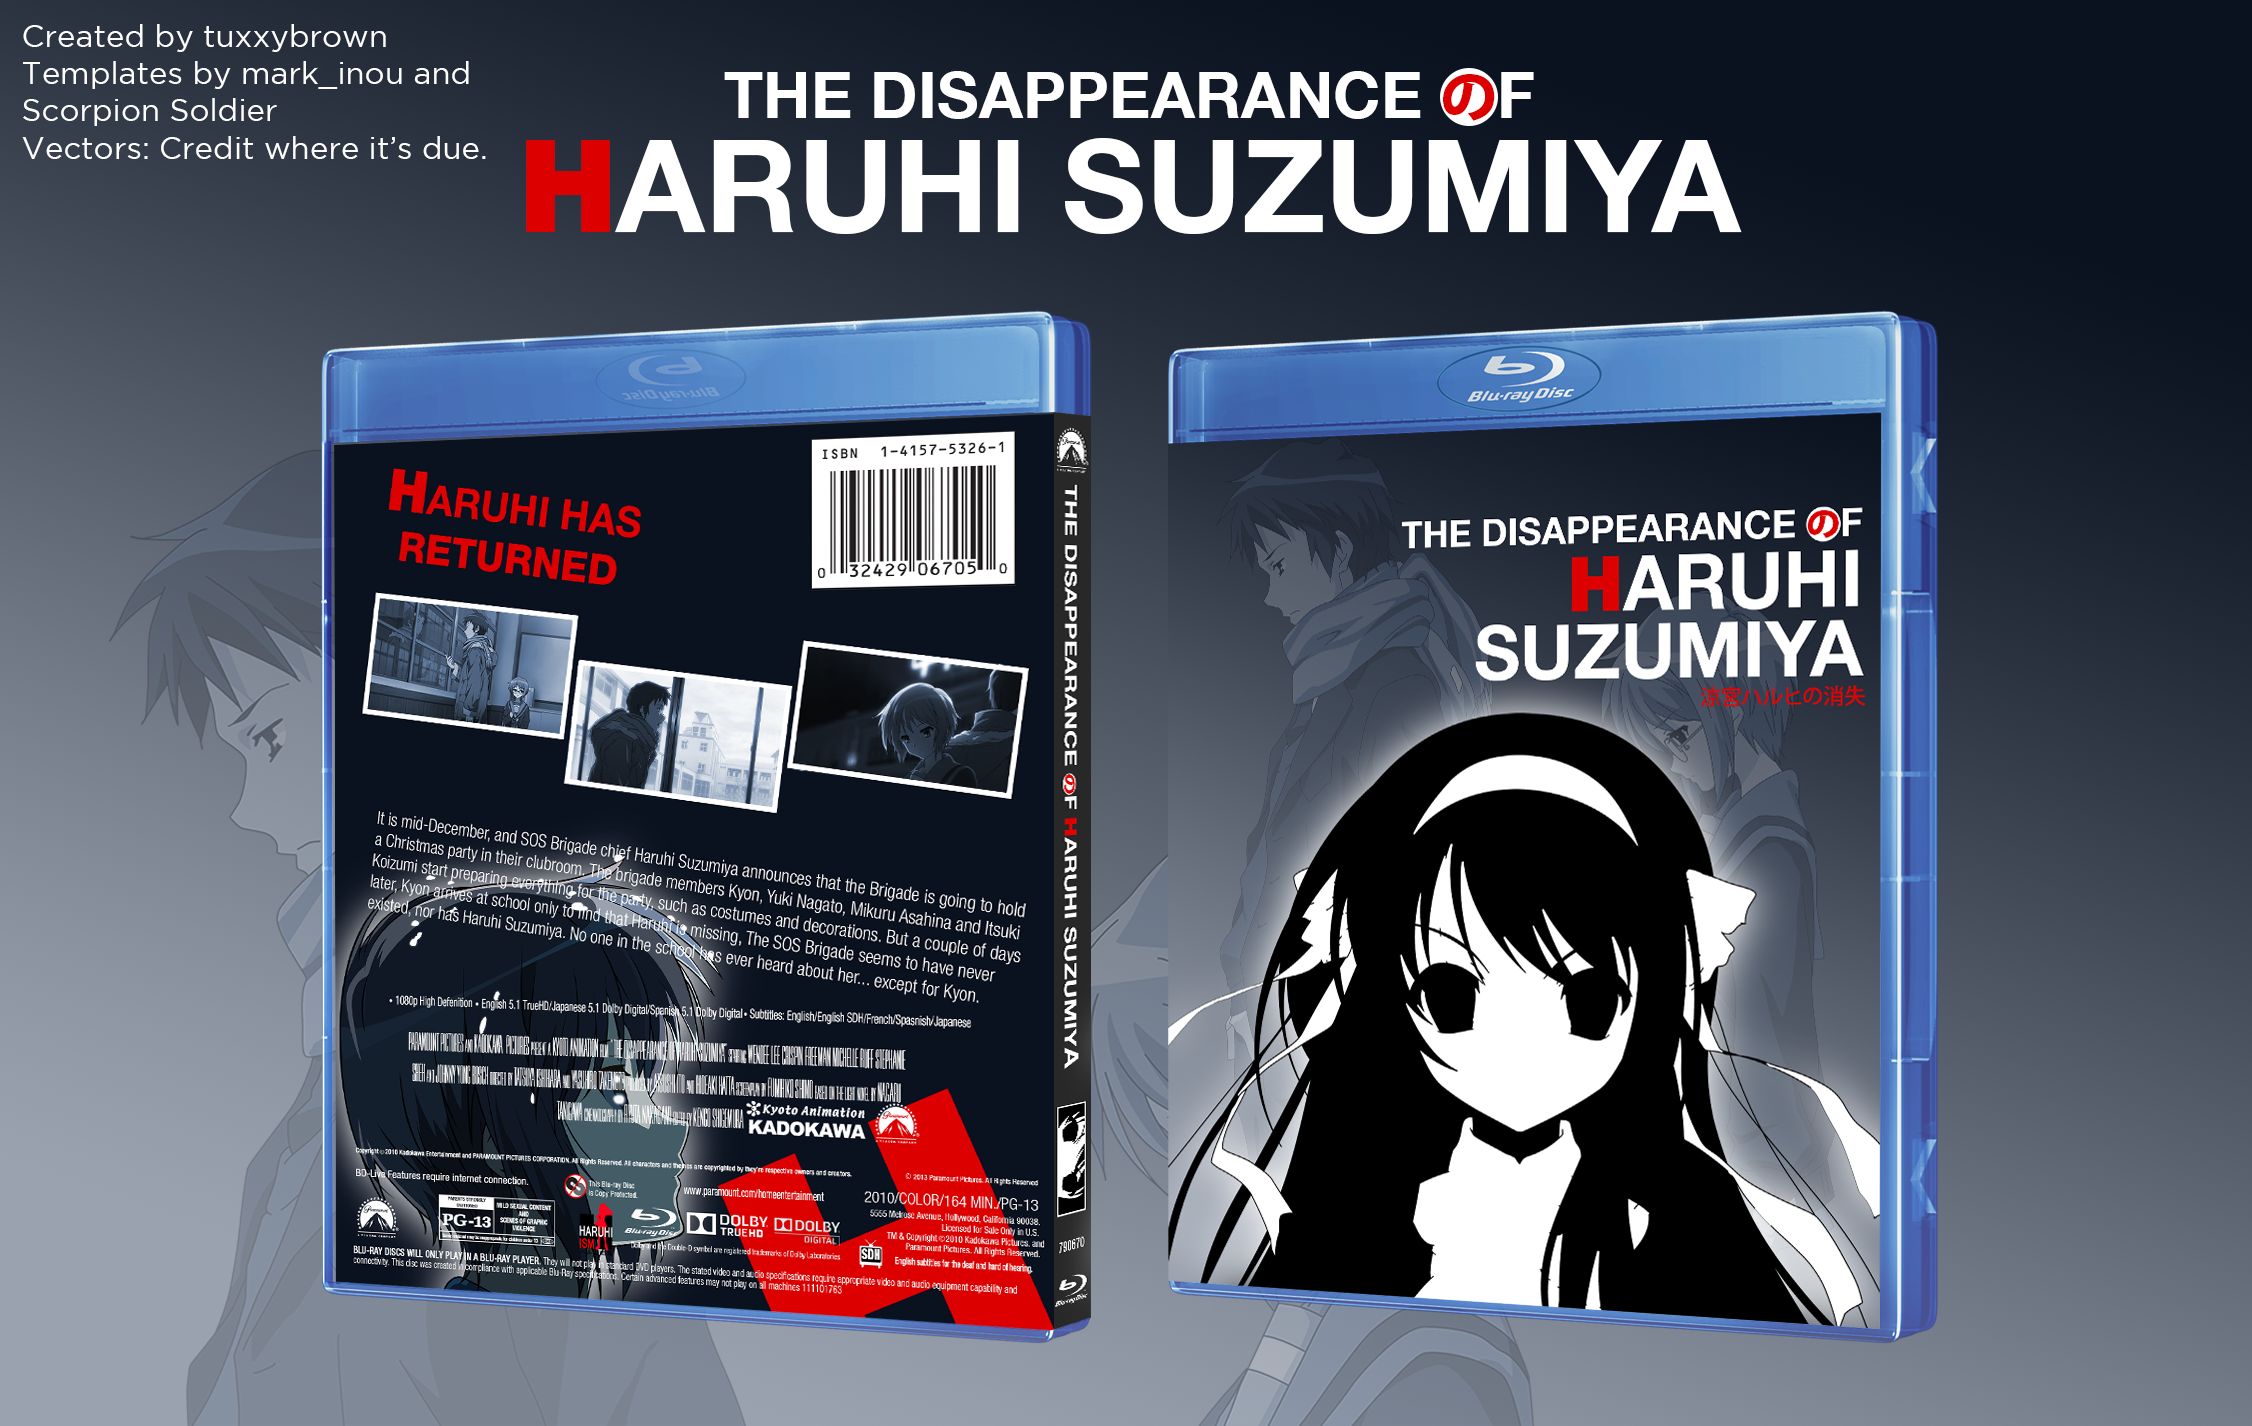 The Disappearance of Haruhi Suzumiya box cover